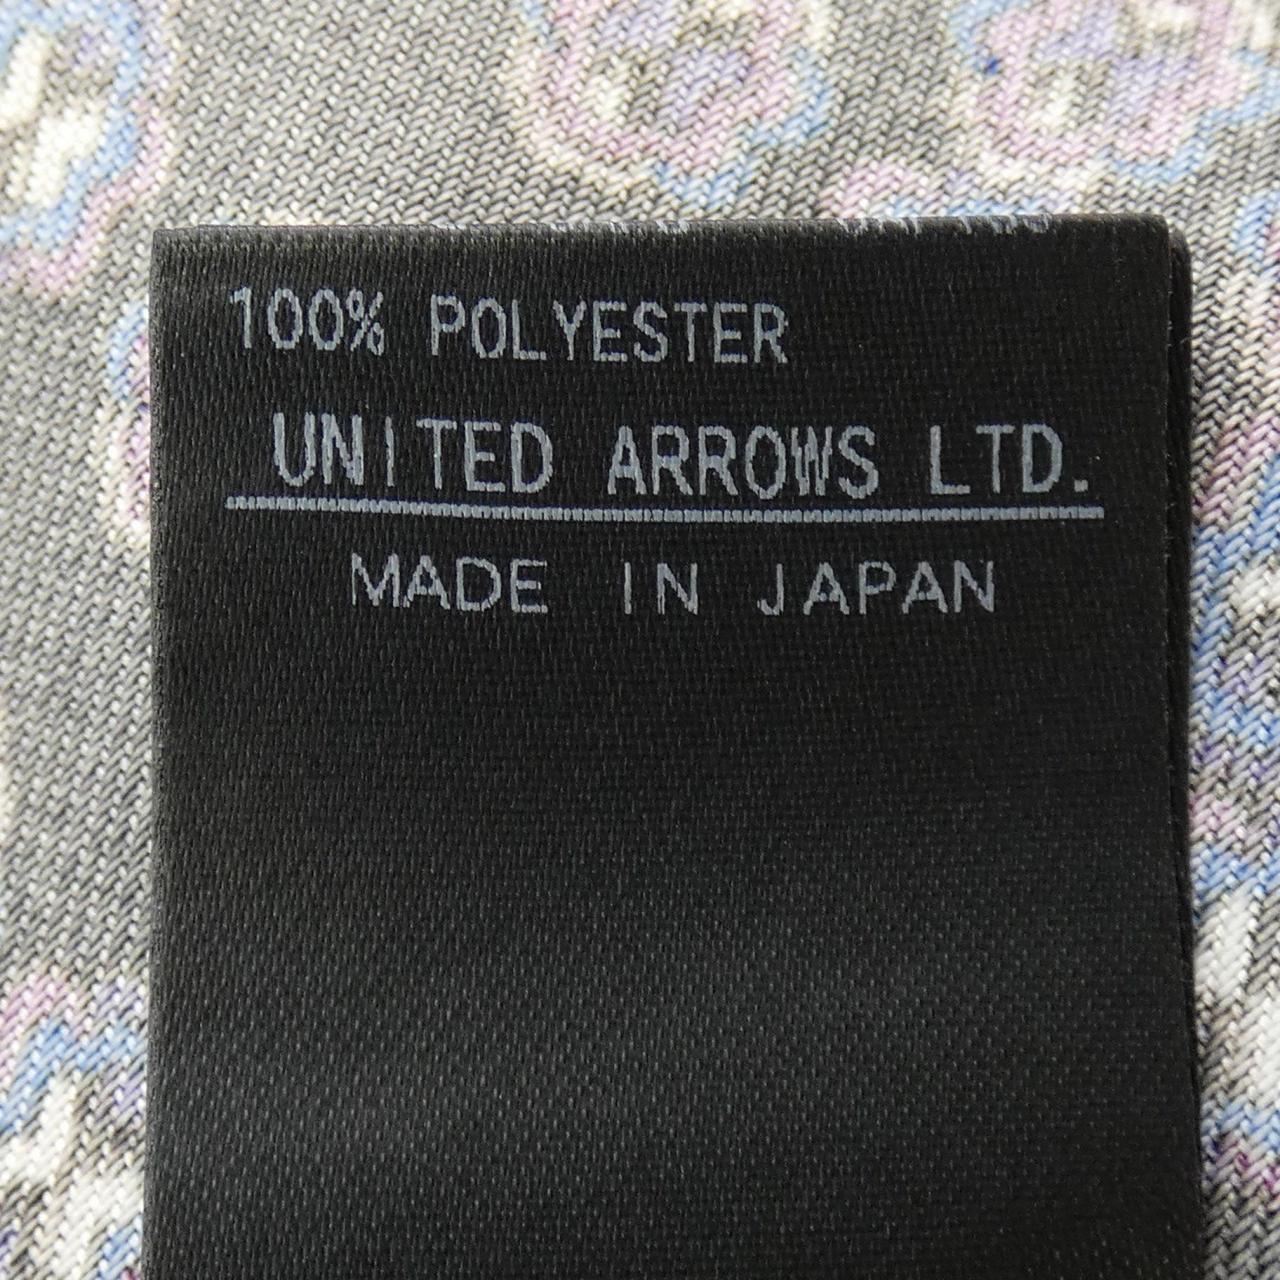 UNITED ARROWS裤子